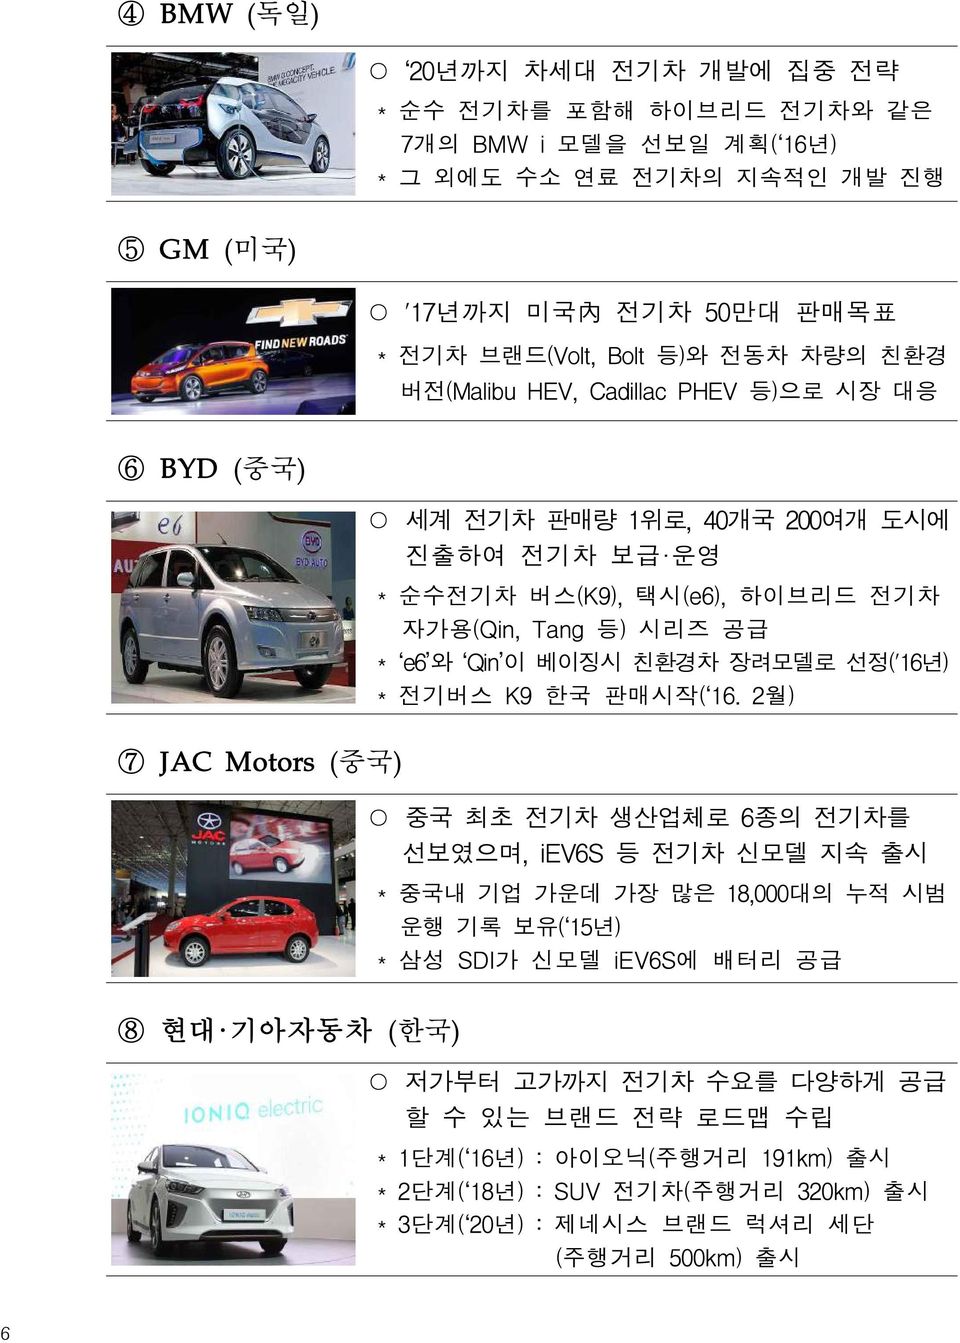 * e6 와 Qin 이 베이징시 친환경차 장려모델로 선정('16년) * 전기버스 K9 한국 판매시작( 16.